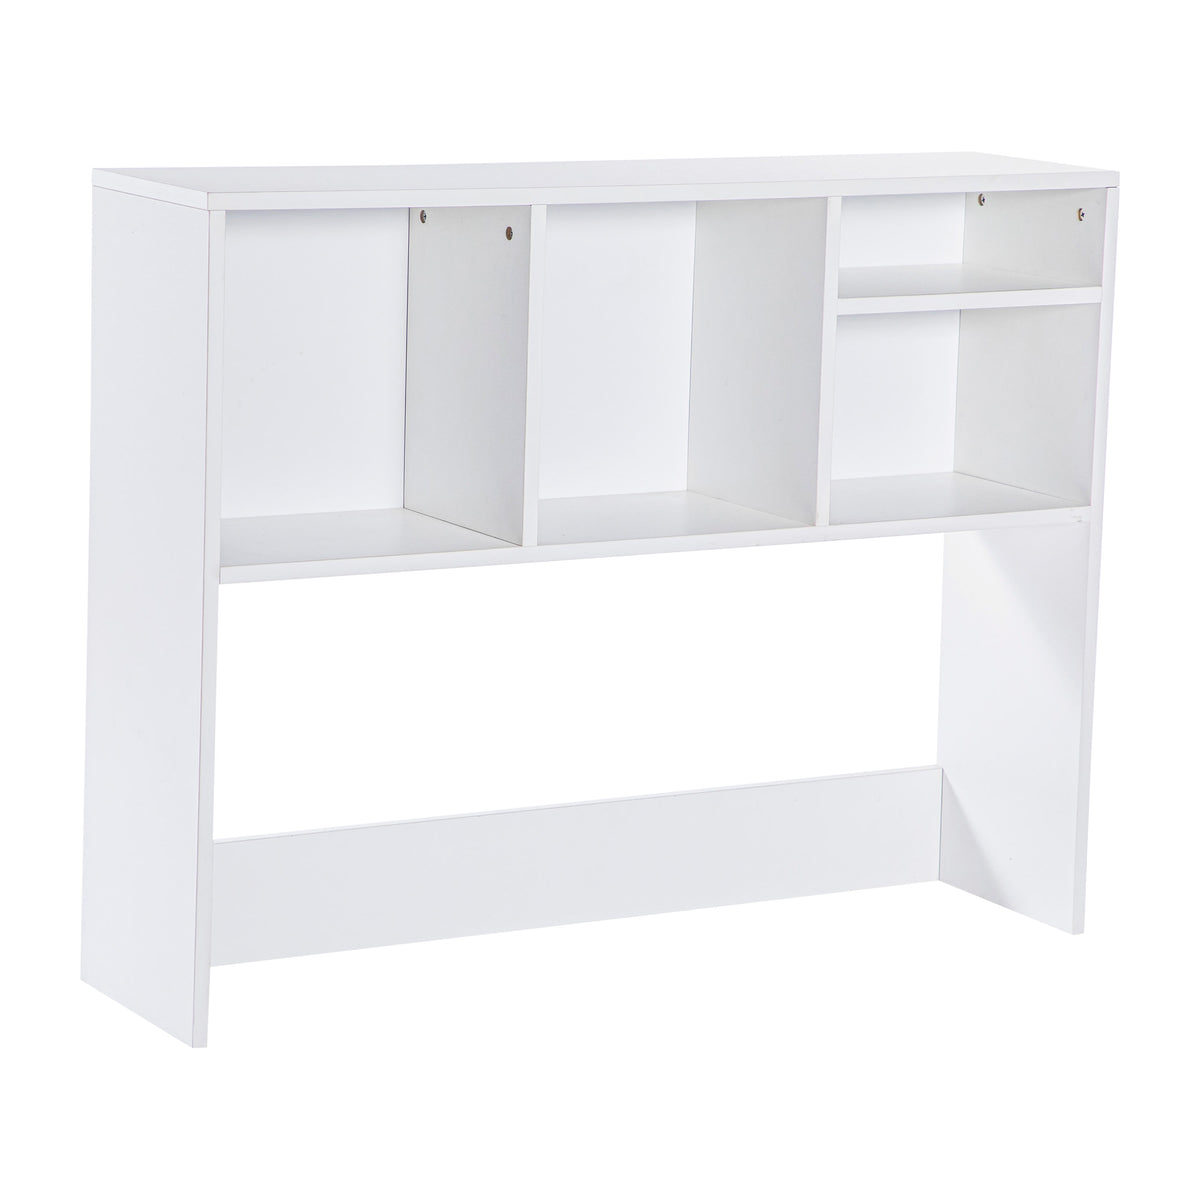 White |#| Space-Saving Desktop Bookshelf Storage Organizer with Assorted Cubbies in White